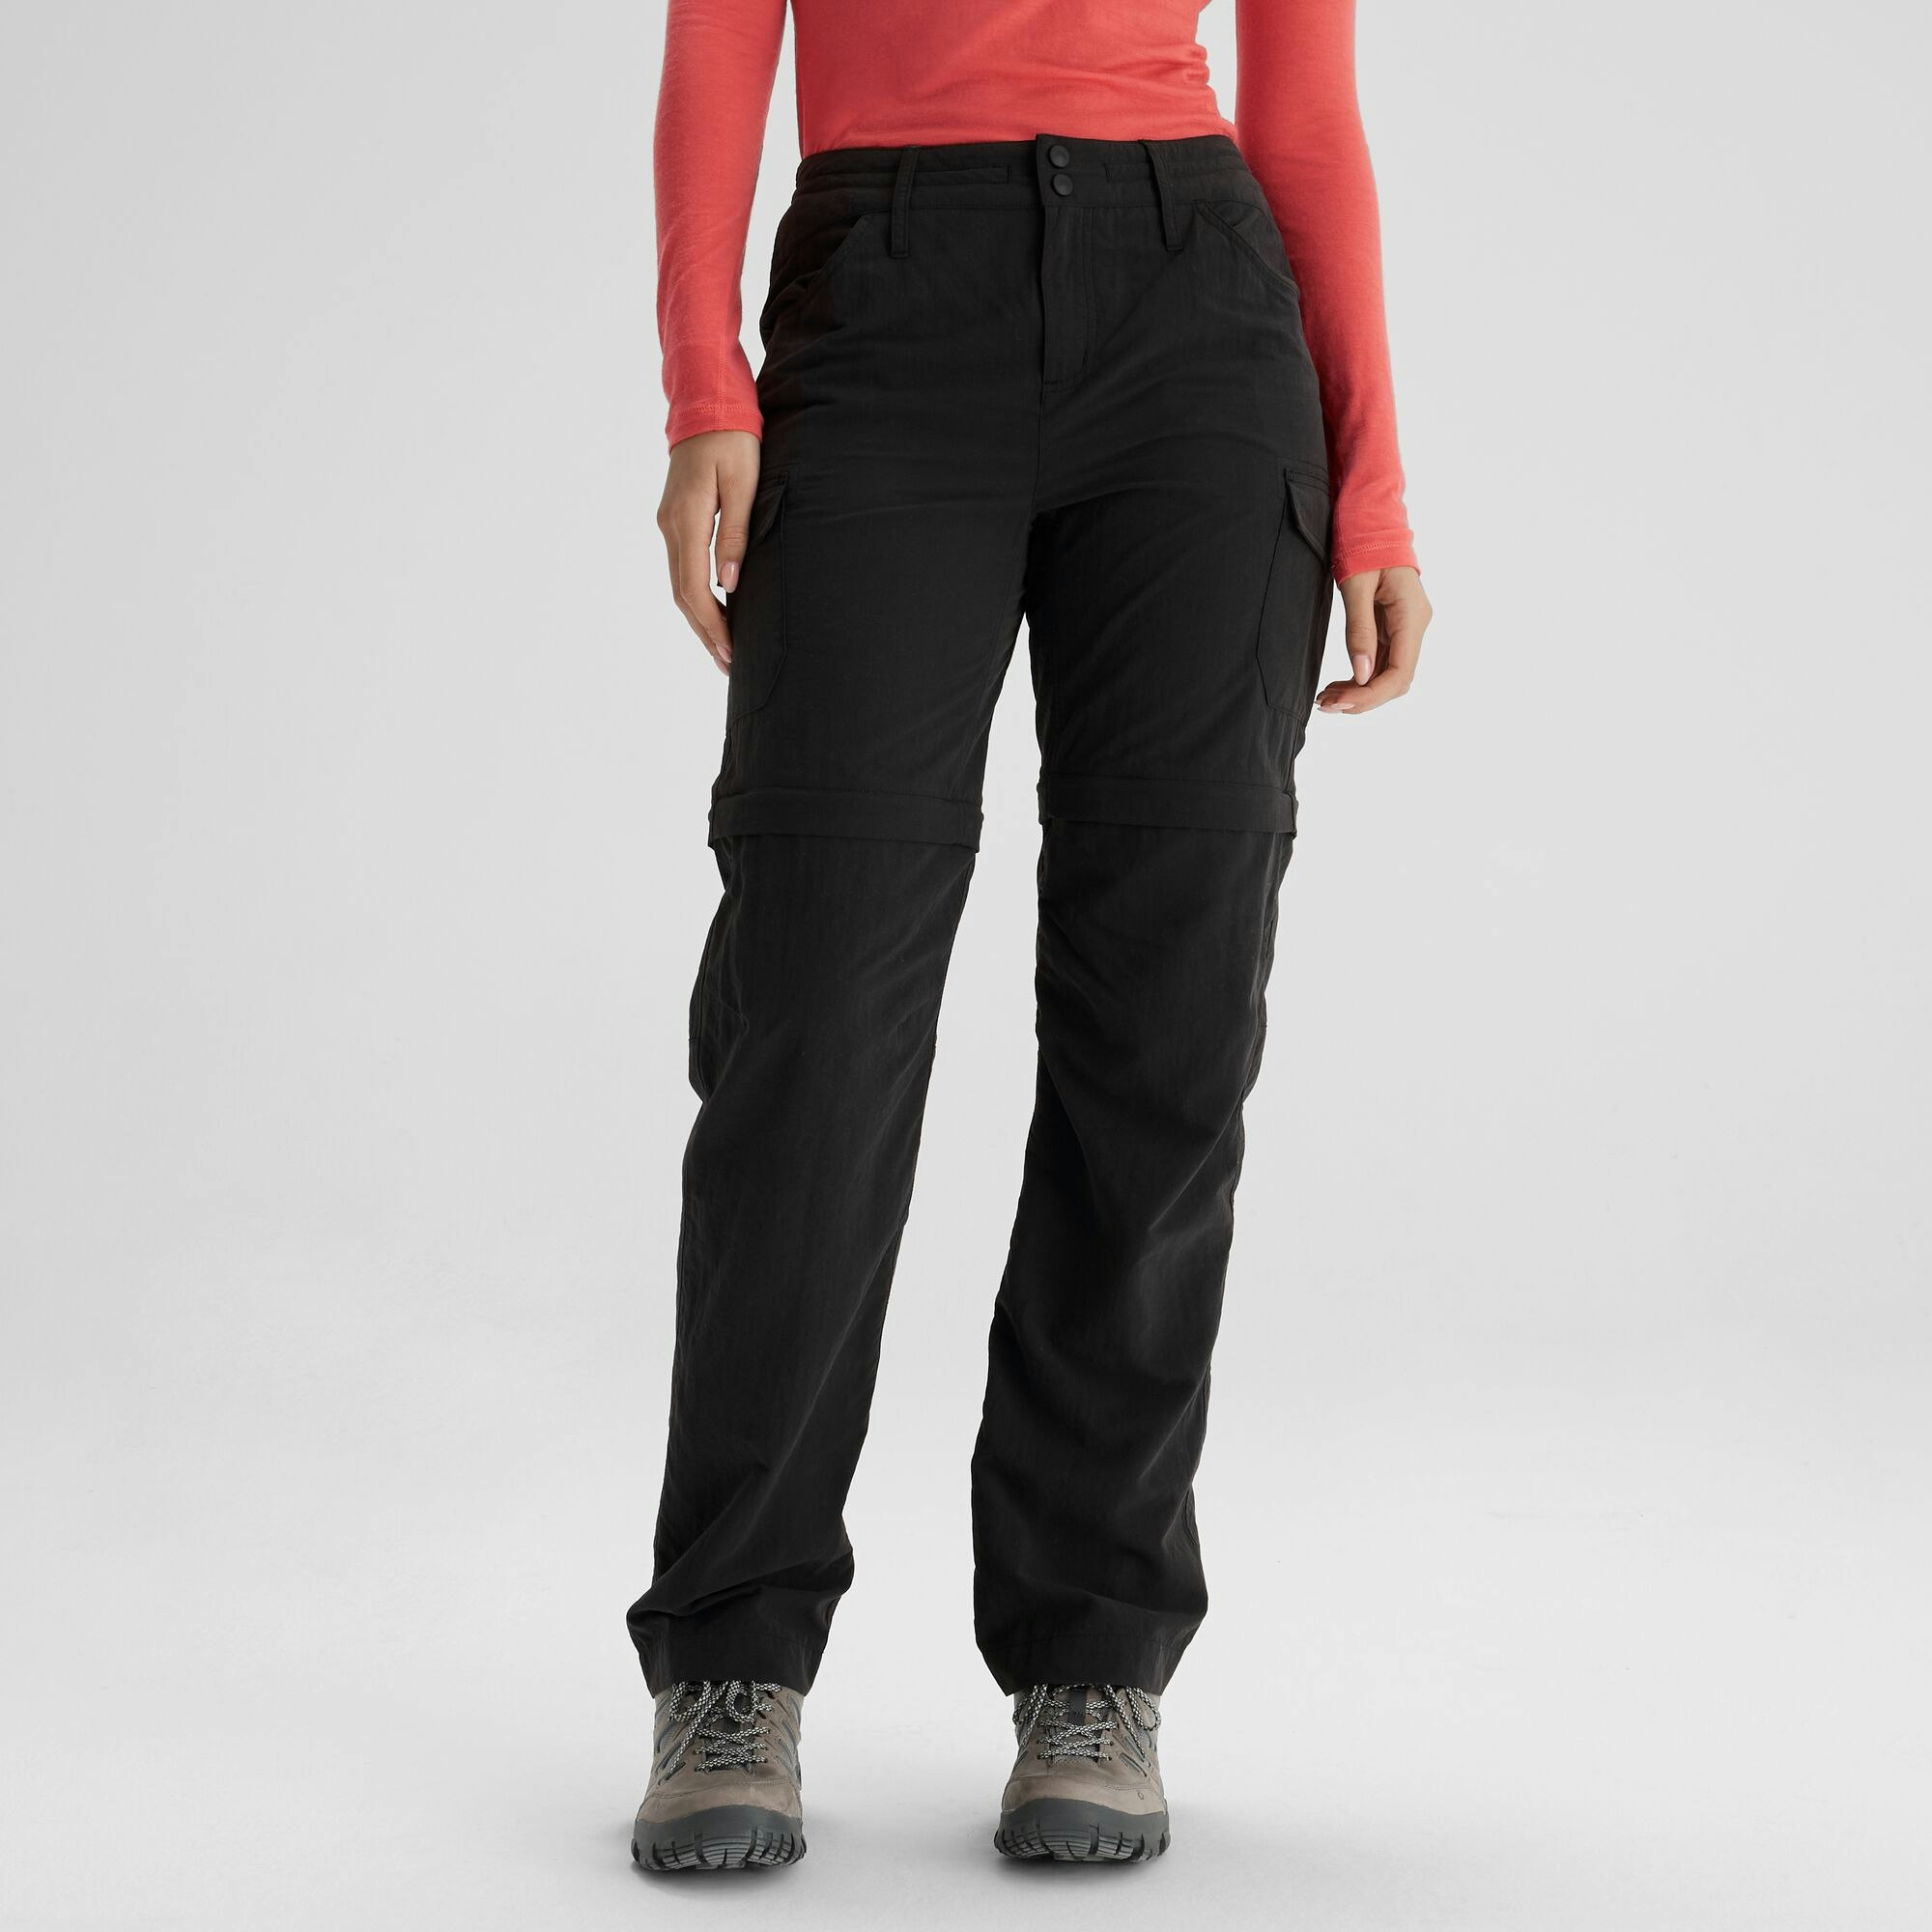 Black Cargo Pants, Black Cargo Pants Online, Buy Women's Black Cargo Pants  Australia